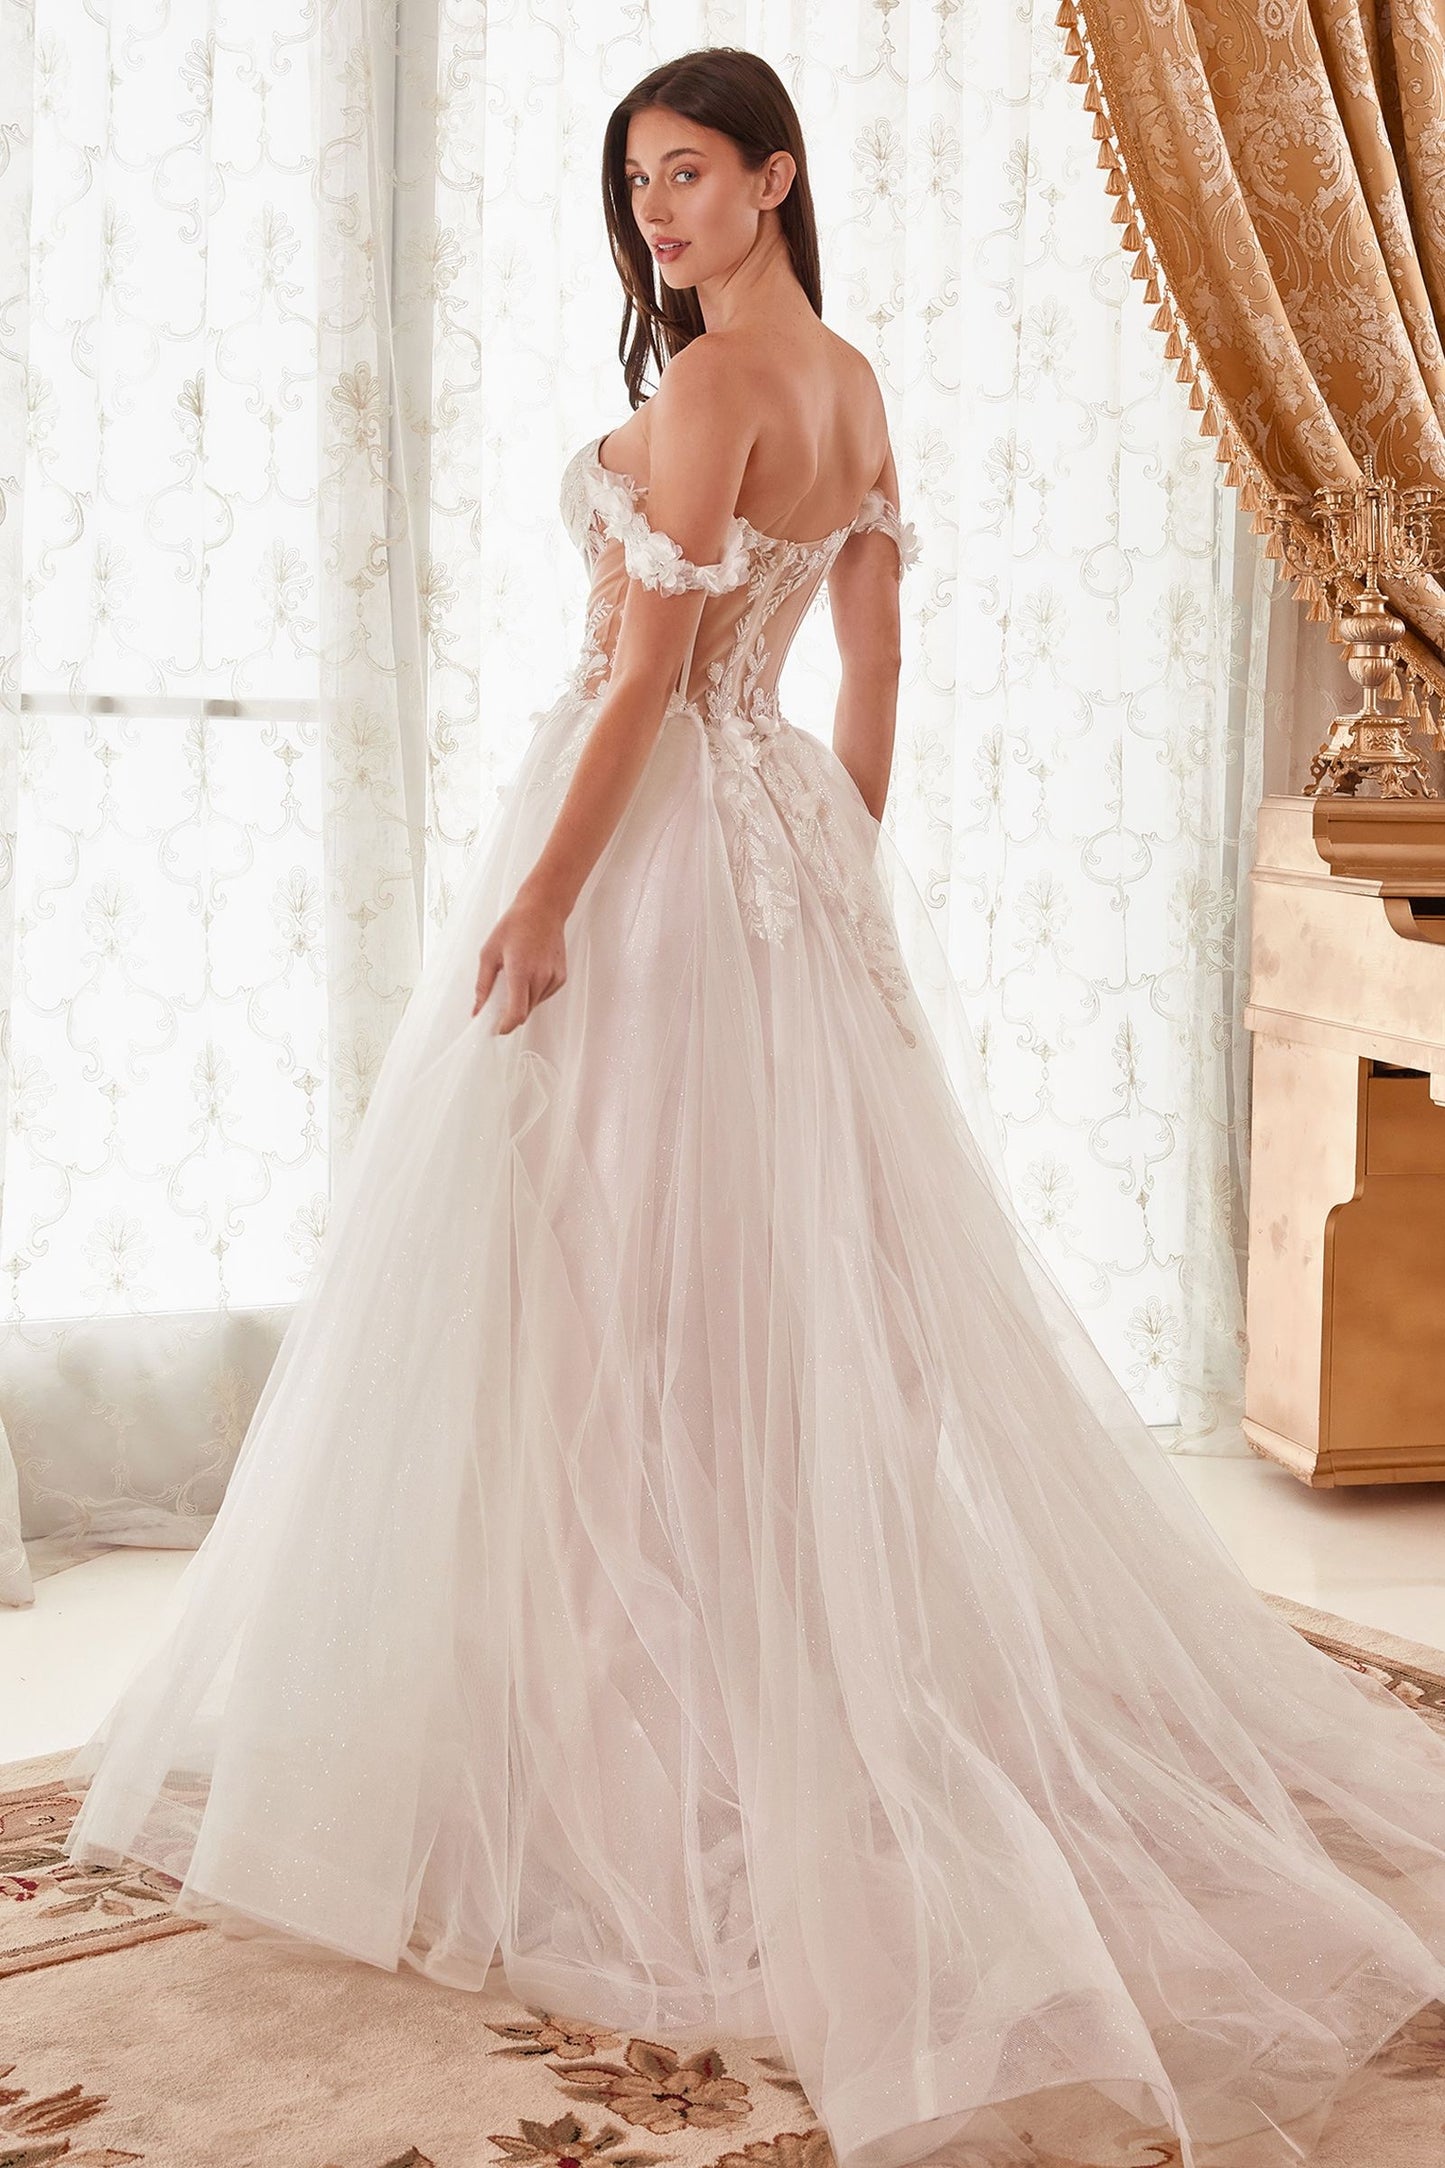 Off The Shoulder Floral A-Line Bridal Gown